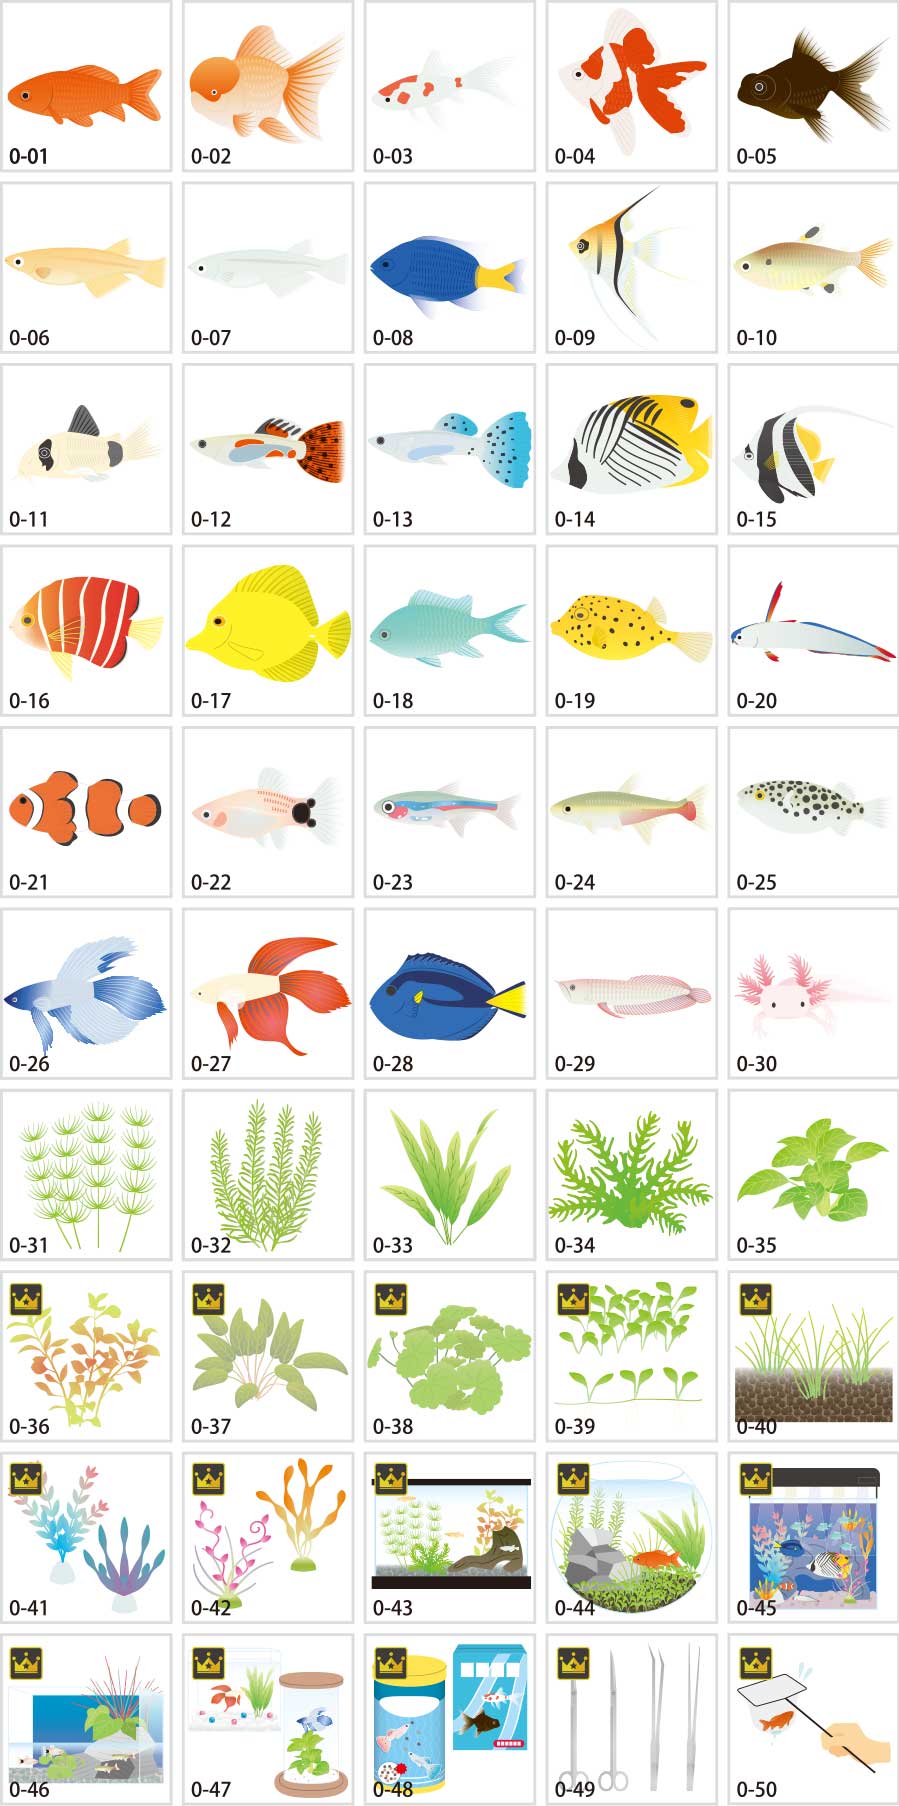 Illustration of ornamental fish